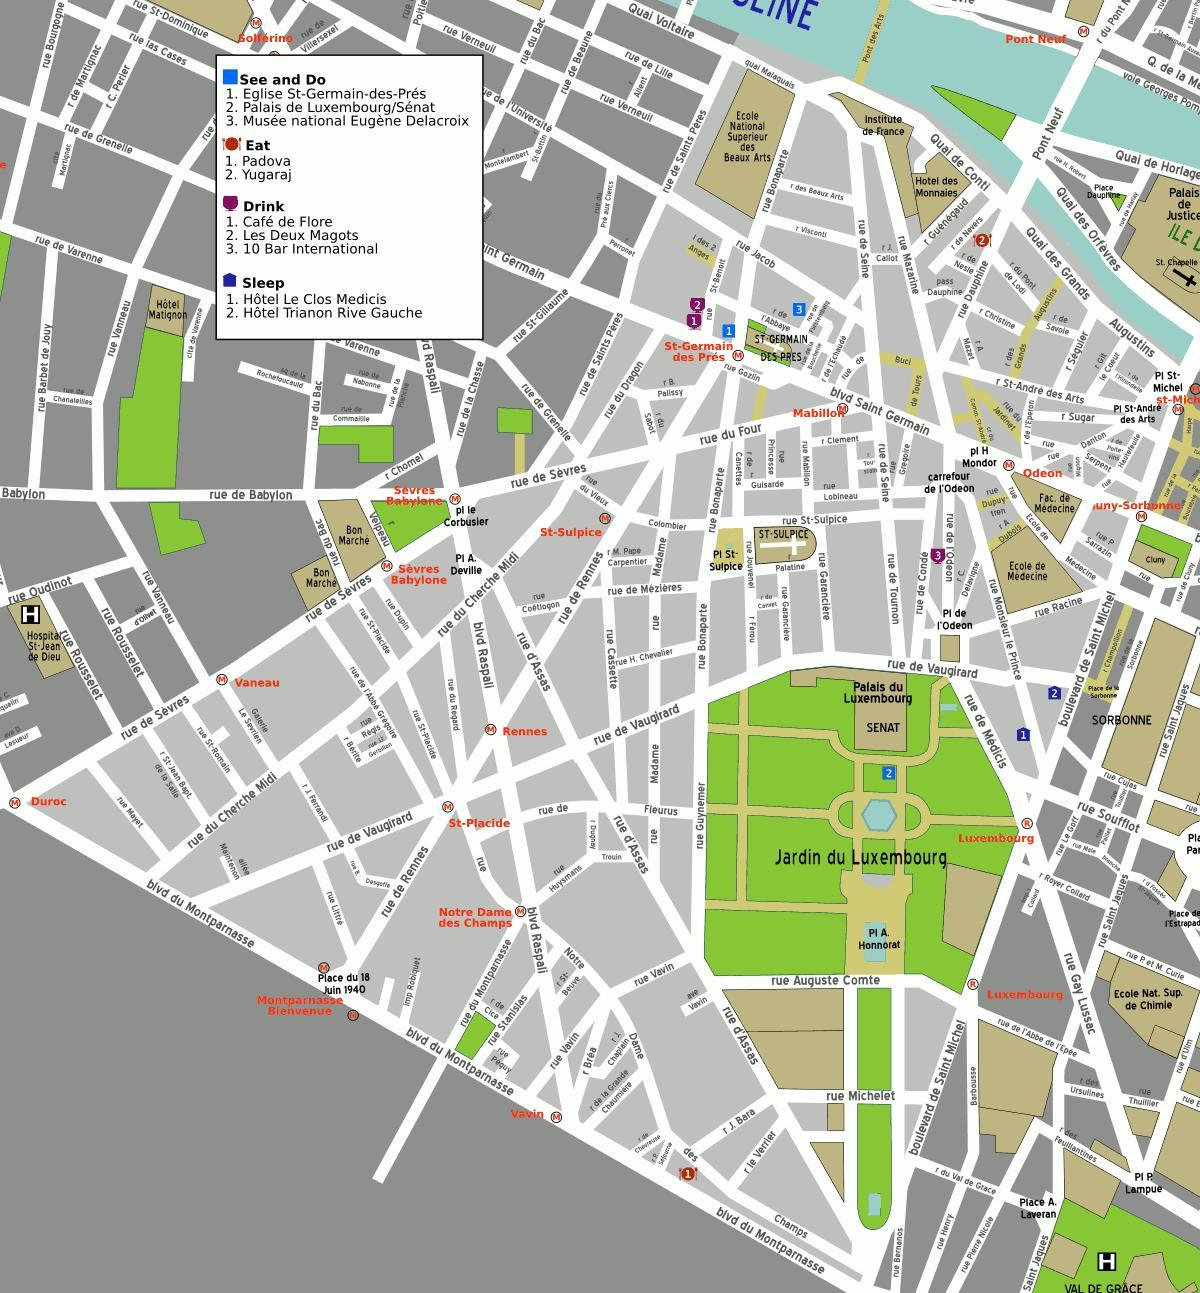 Karta över 6: e arrondissementet i Paris